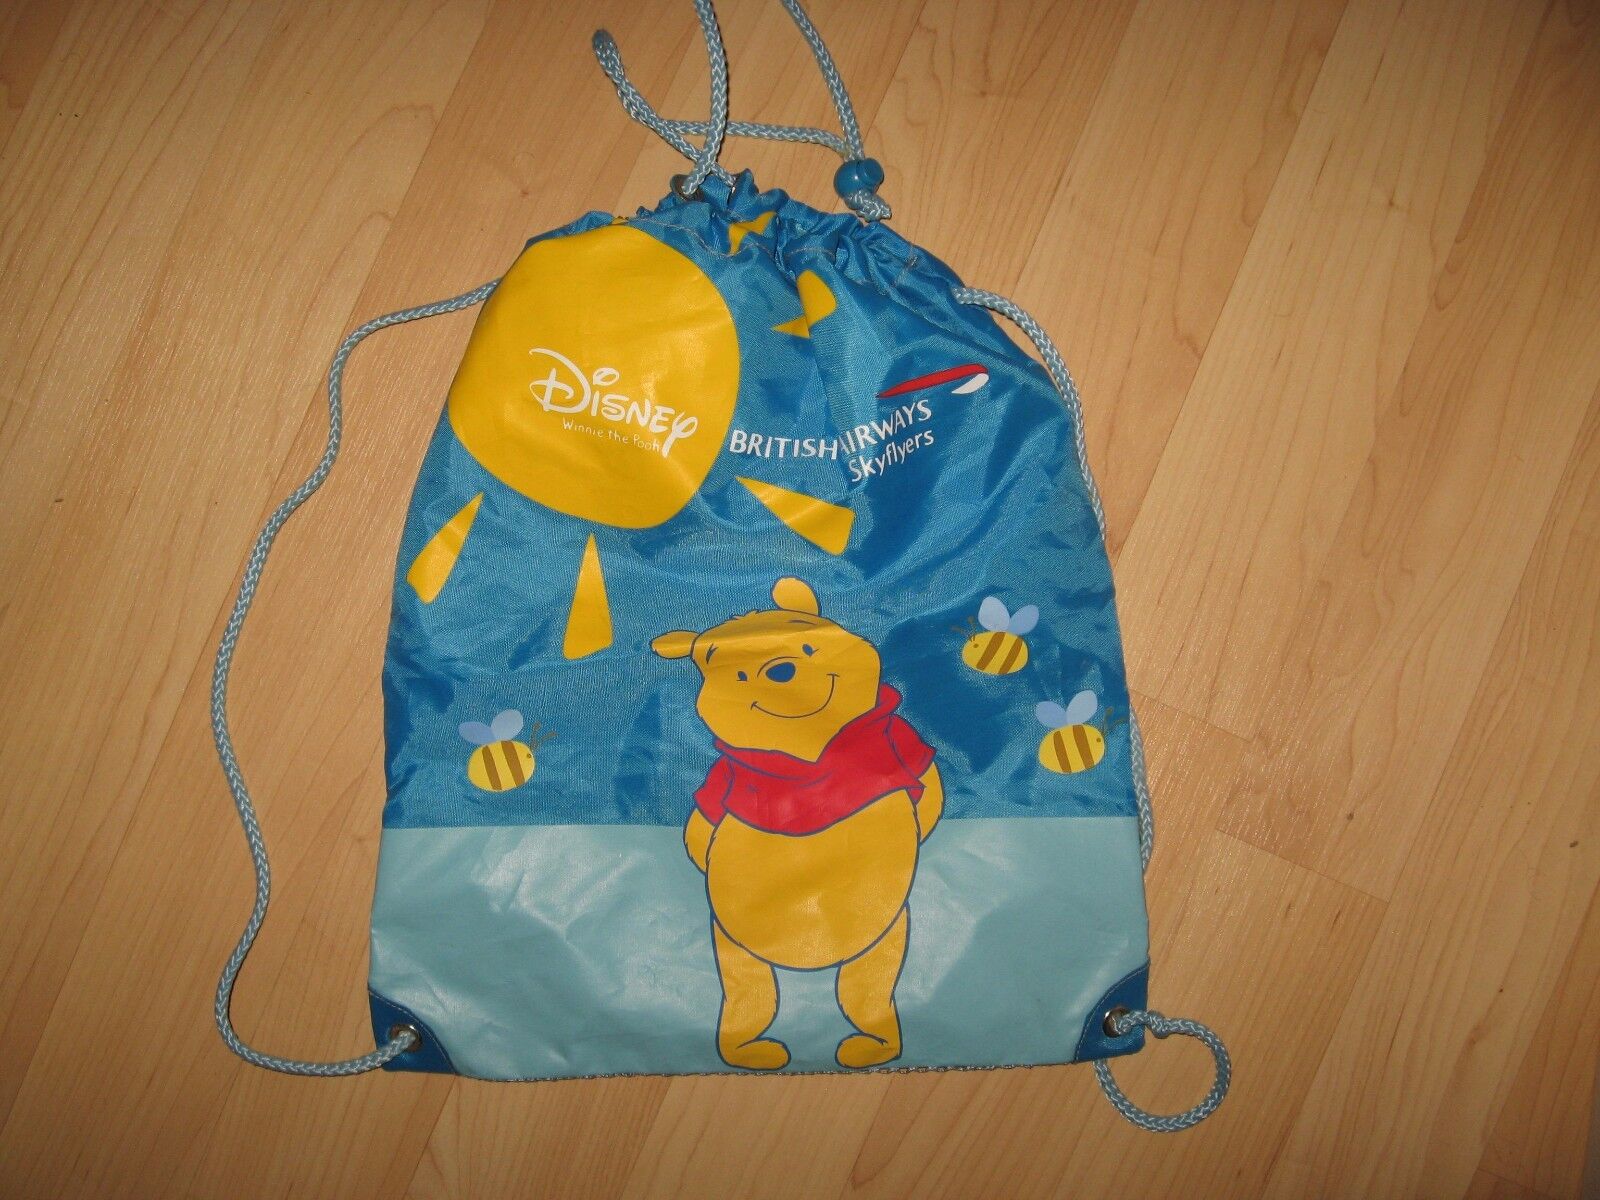 British Airways Kids Backpack - Walt Disney World Winnie The Pooh Nylon Bag